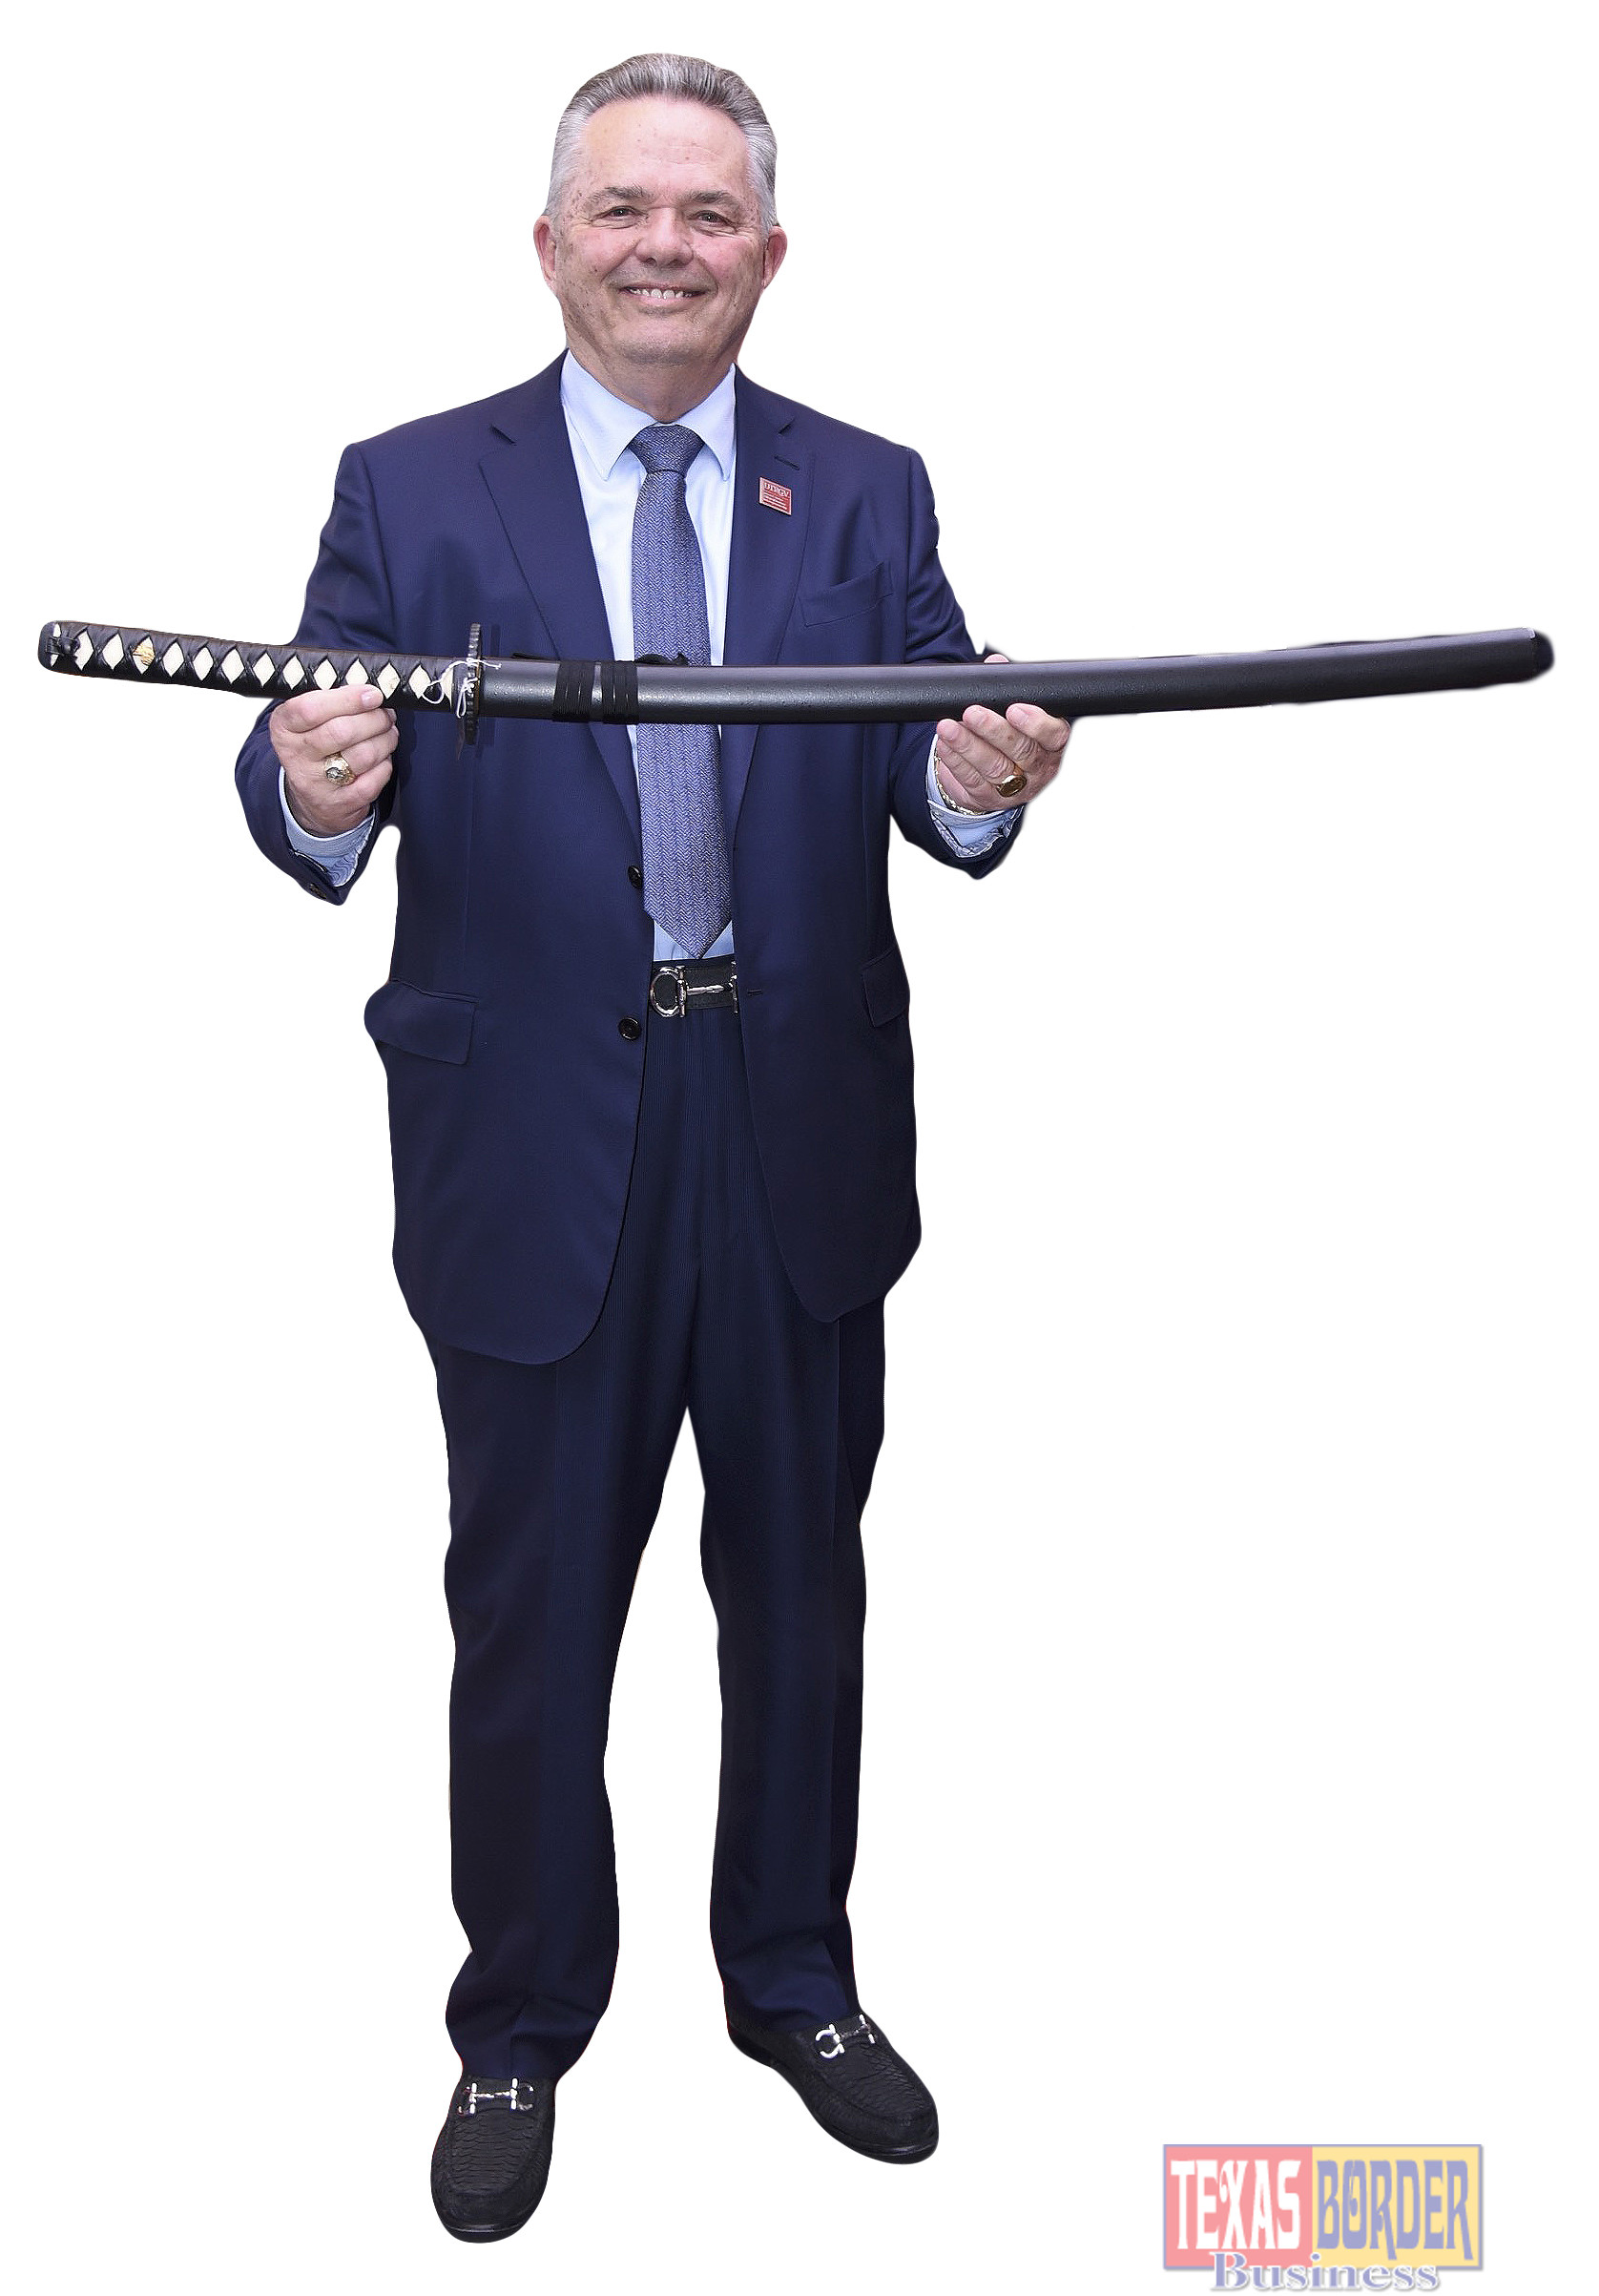 Bob Vackar holding a katana sword